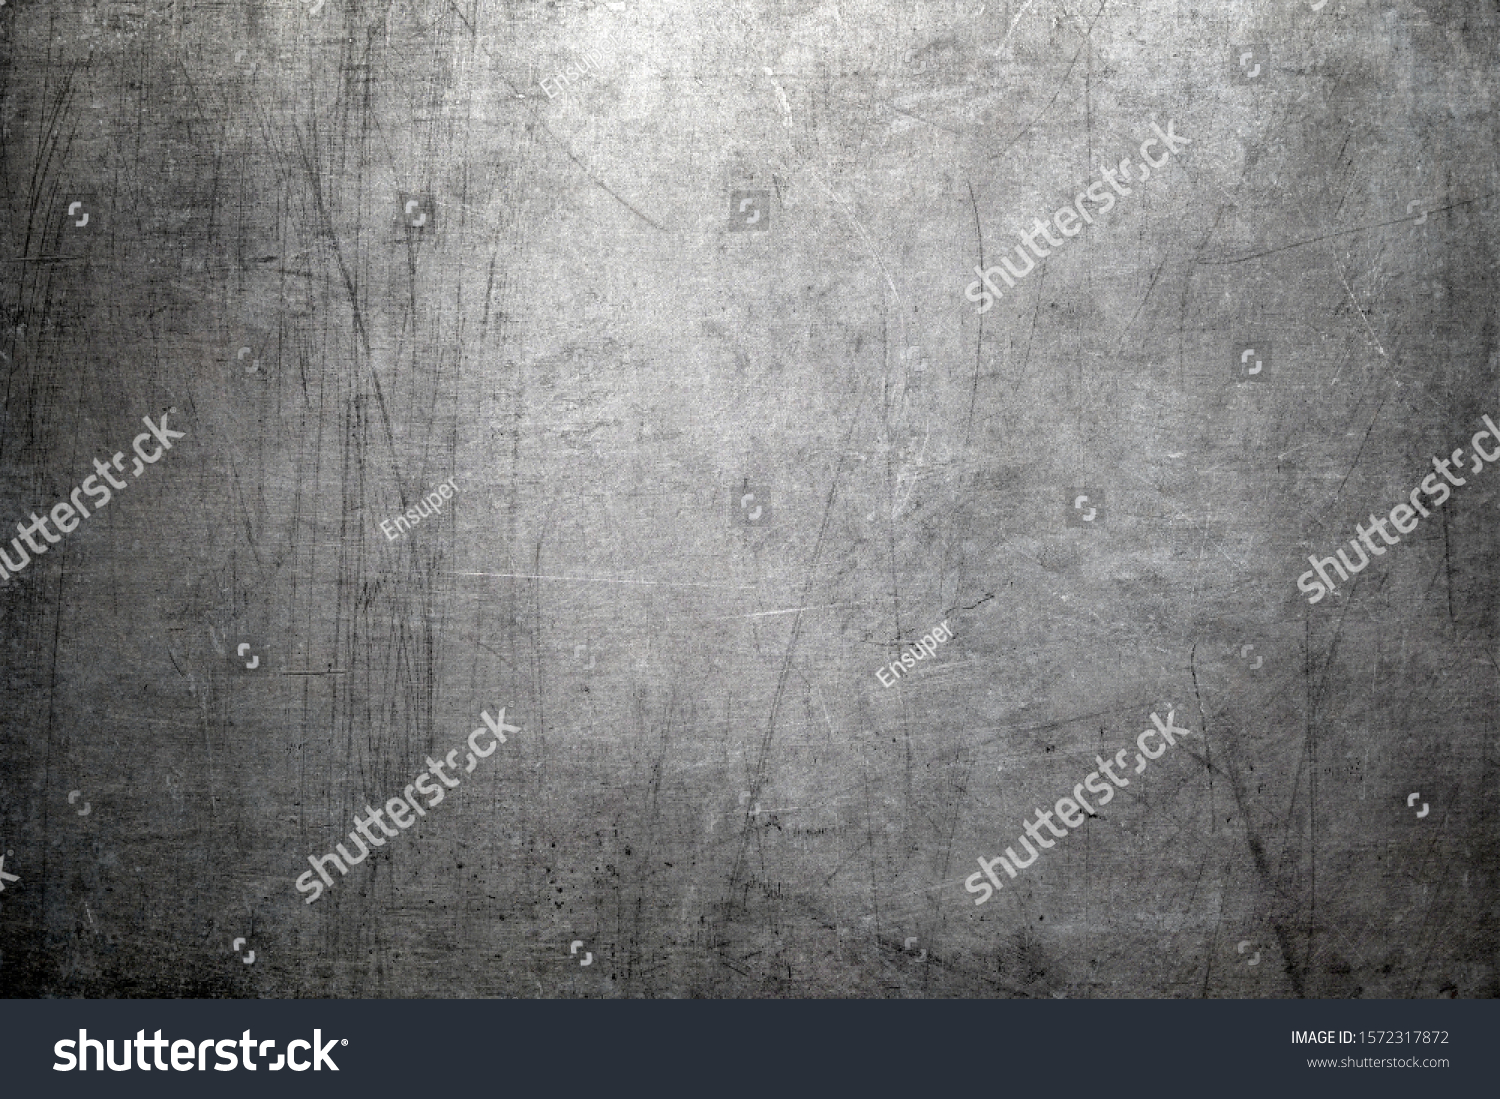 Grunge metal background, rusty steel texture 